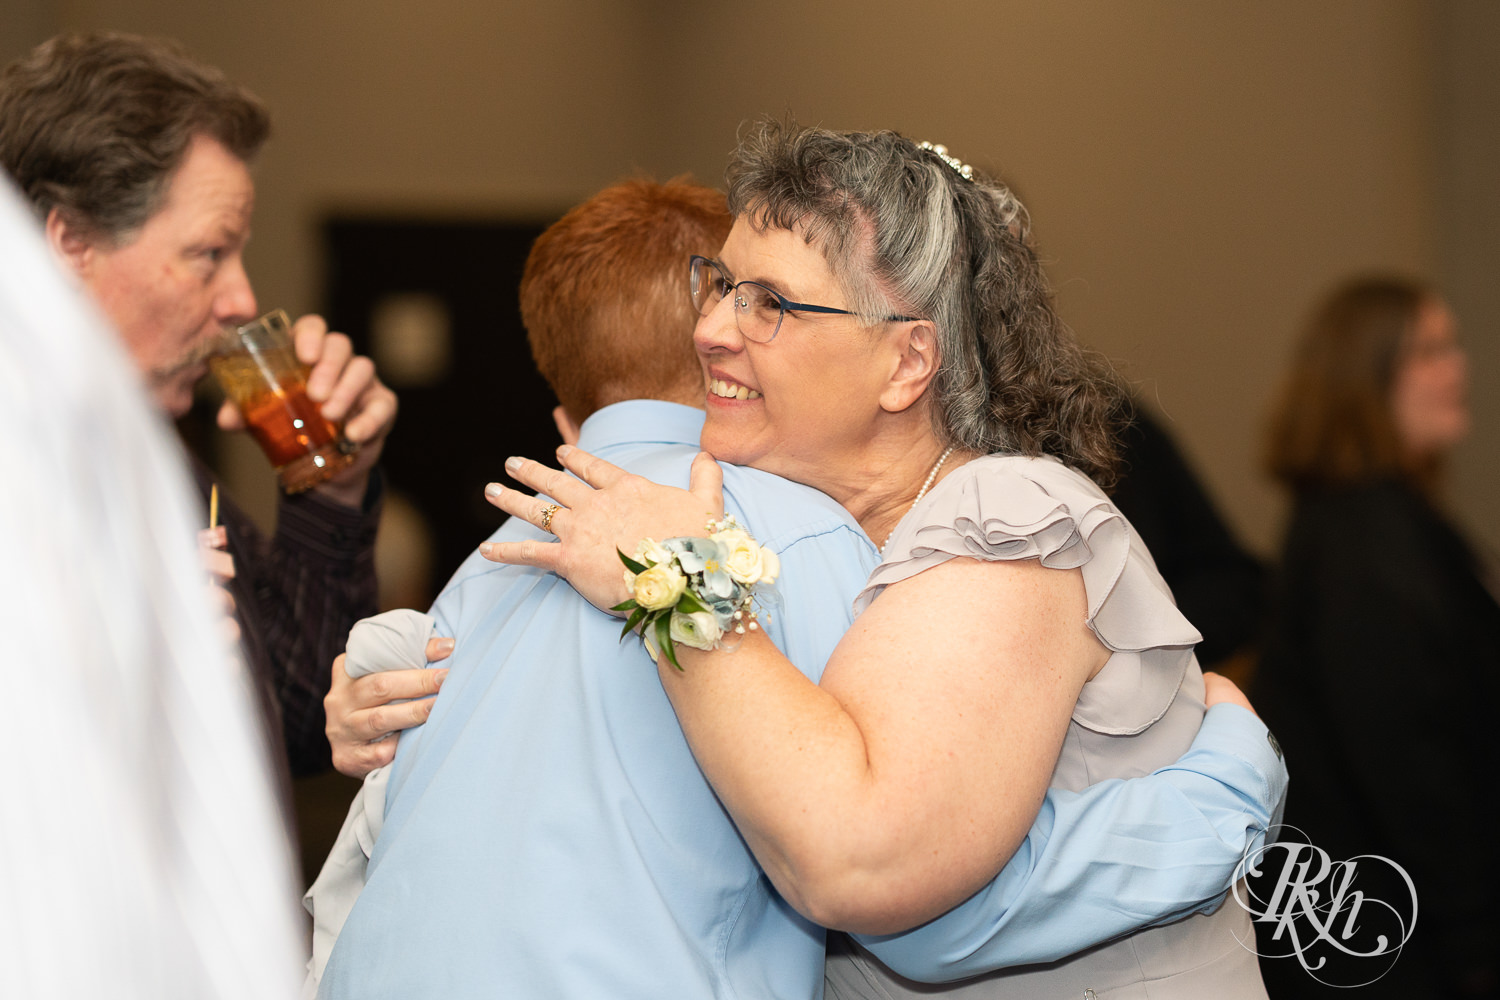 Guests hug at wedding reception at Doubletree Hilton Saint Paul in Saint Paul, Minnesota.